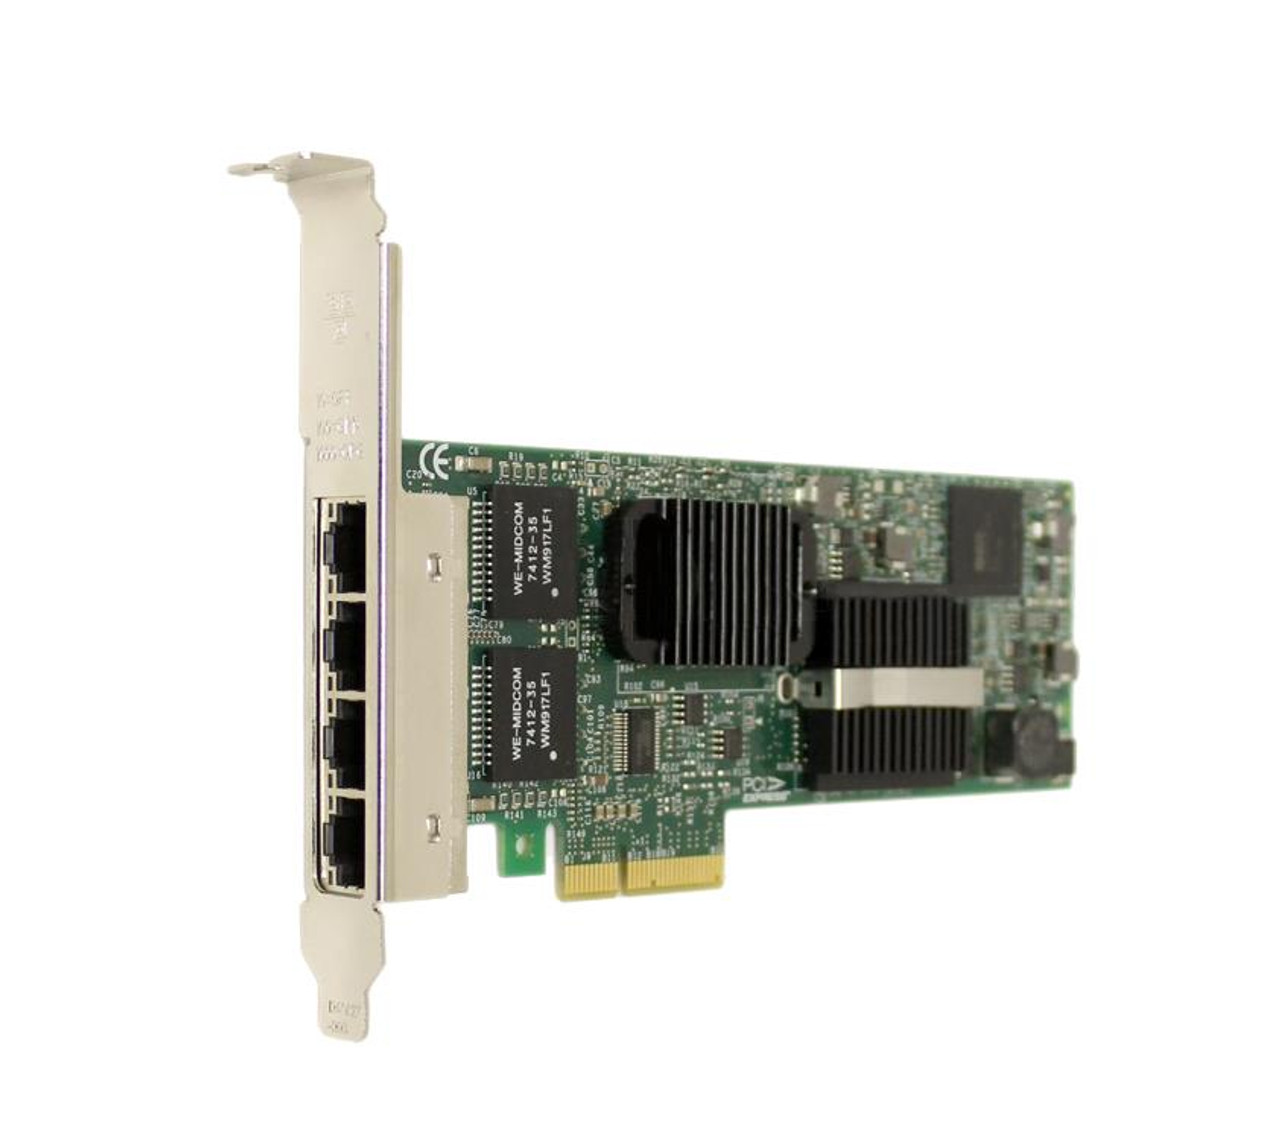 EXPI9404VT Intel Gigabit VT Quad-Ports RJ-45 1Gbps 10Base-T/100Base-TX/1000Base-T Gigabit Ethernet PCI Express 1.1 x4 Server Network Adapter